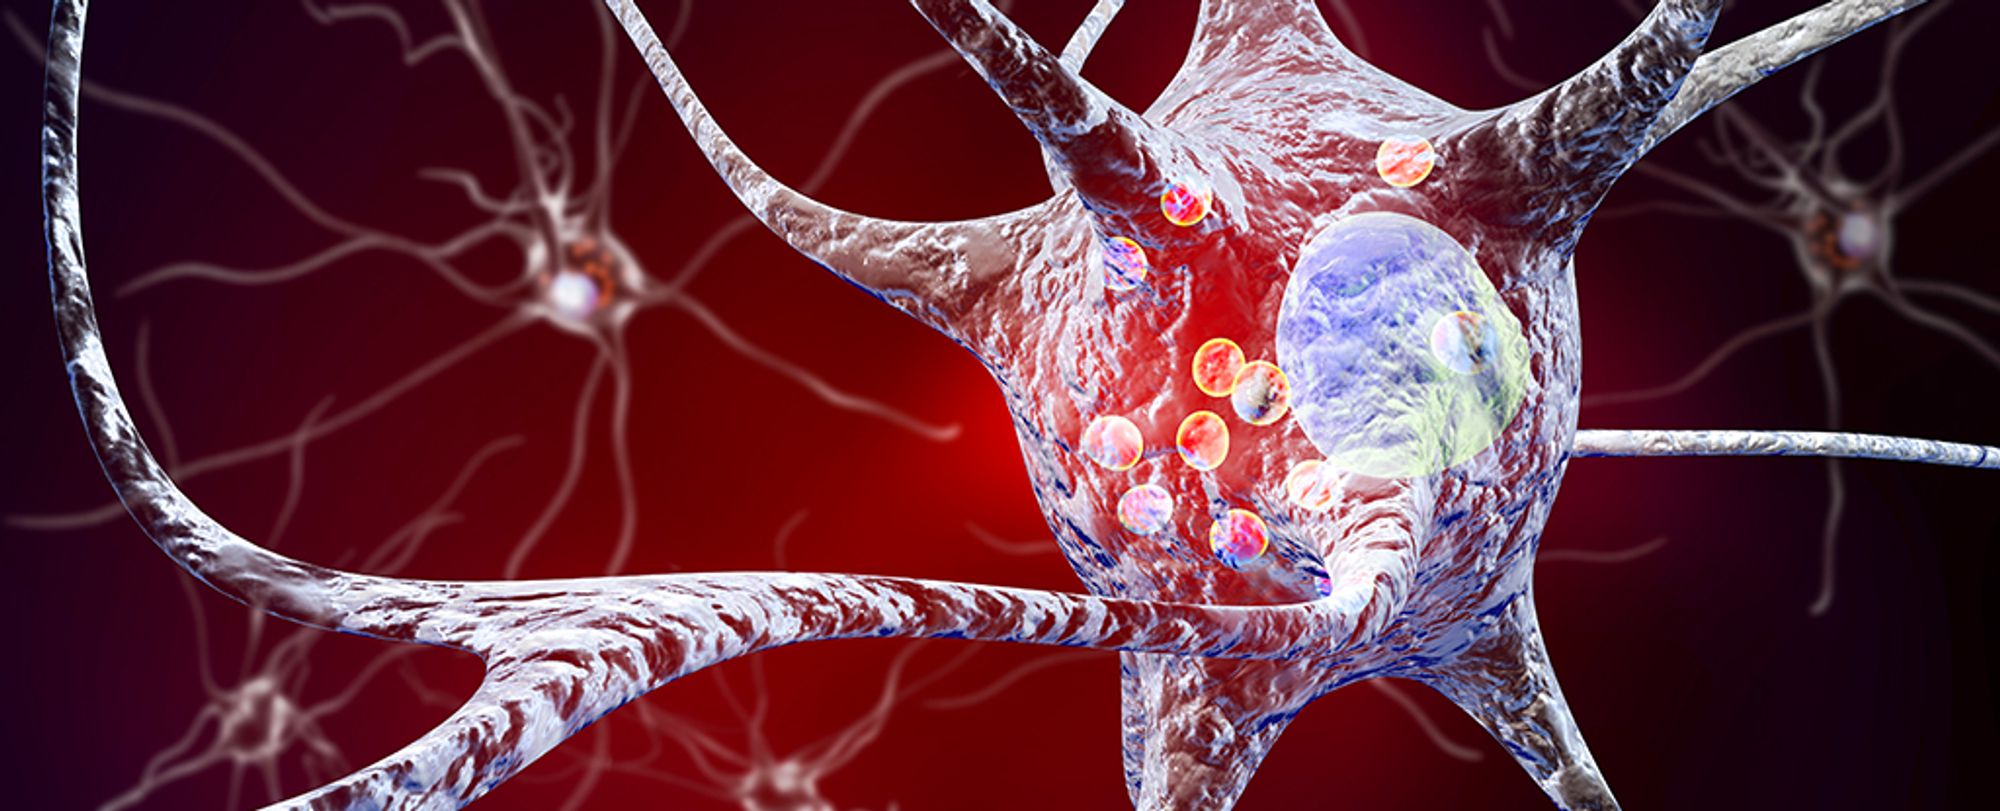 Parkinson's Drug Reduces Disease Markers in Breakthrough Trial